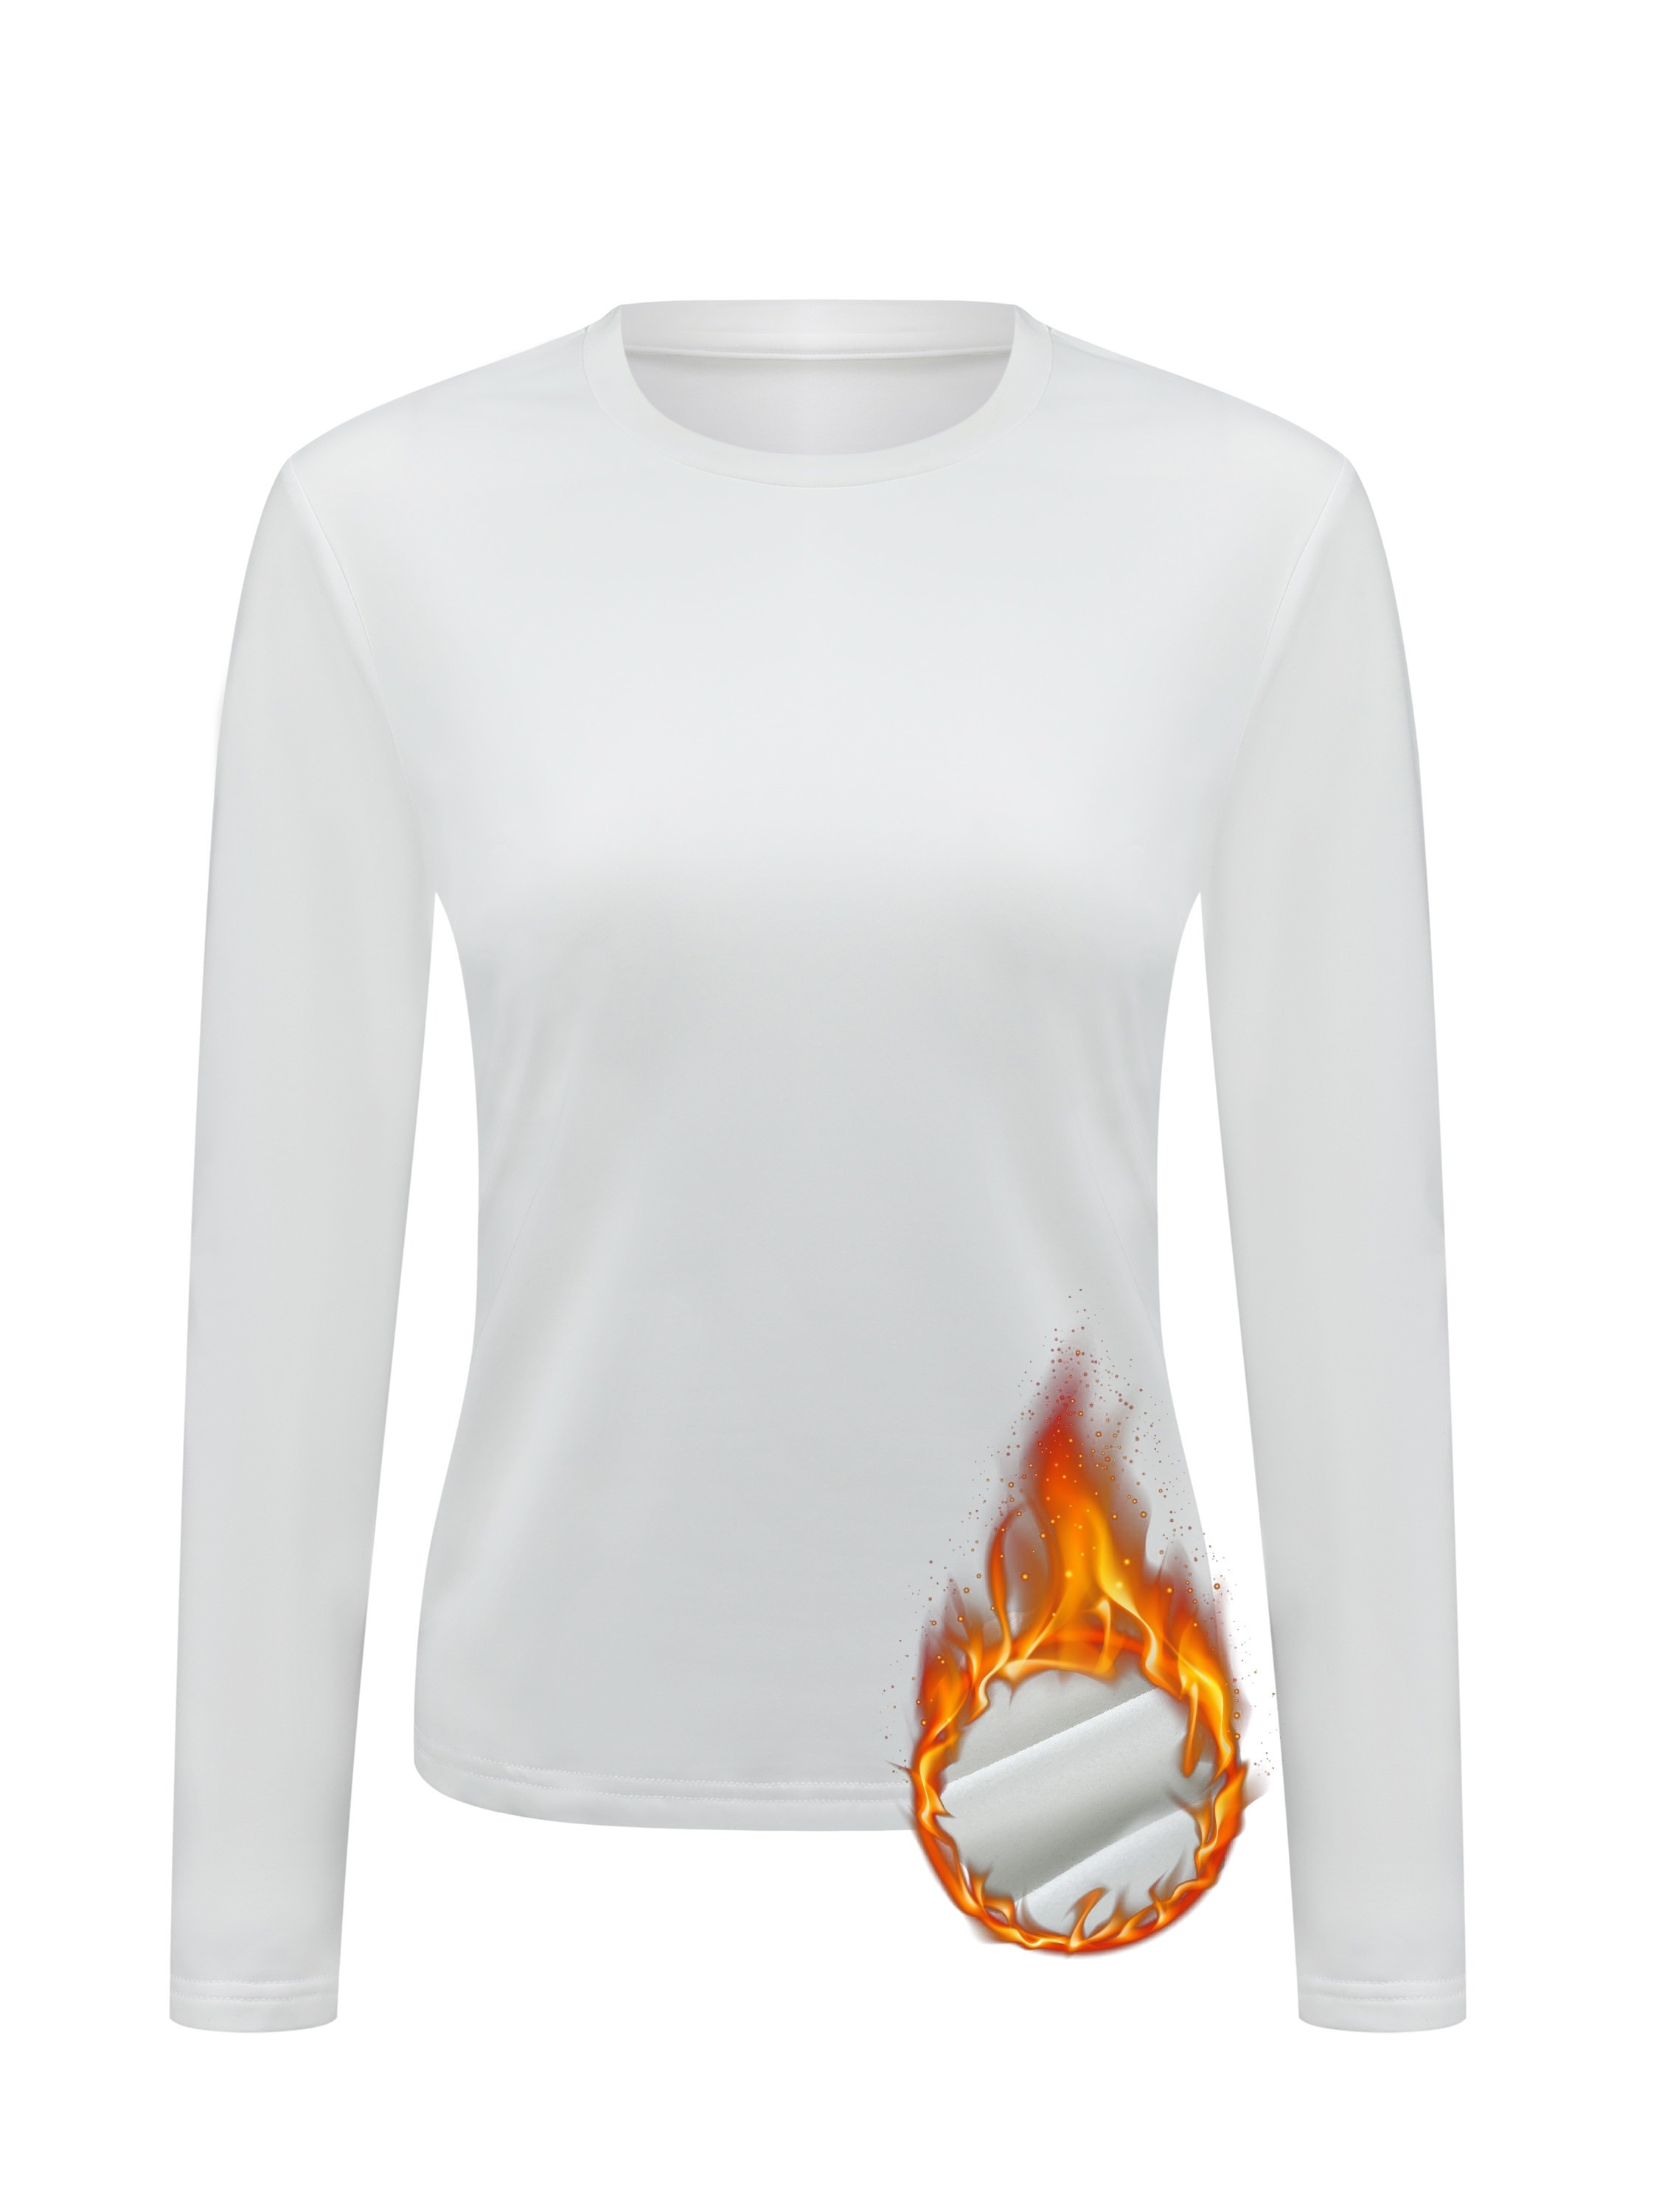 Camiseta termal de mujer cuello alto manga larga, Camisetas de mujer